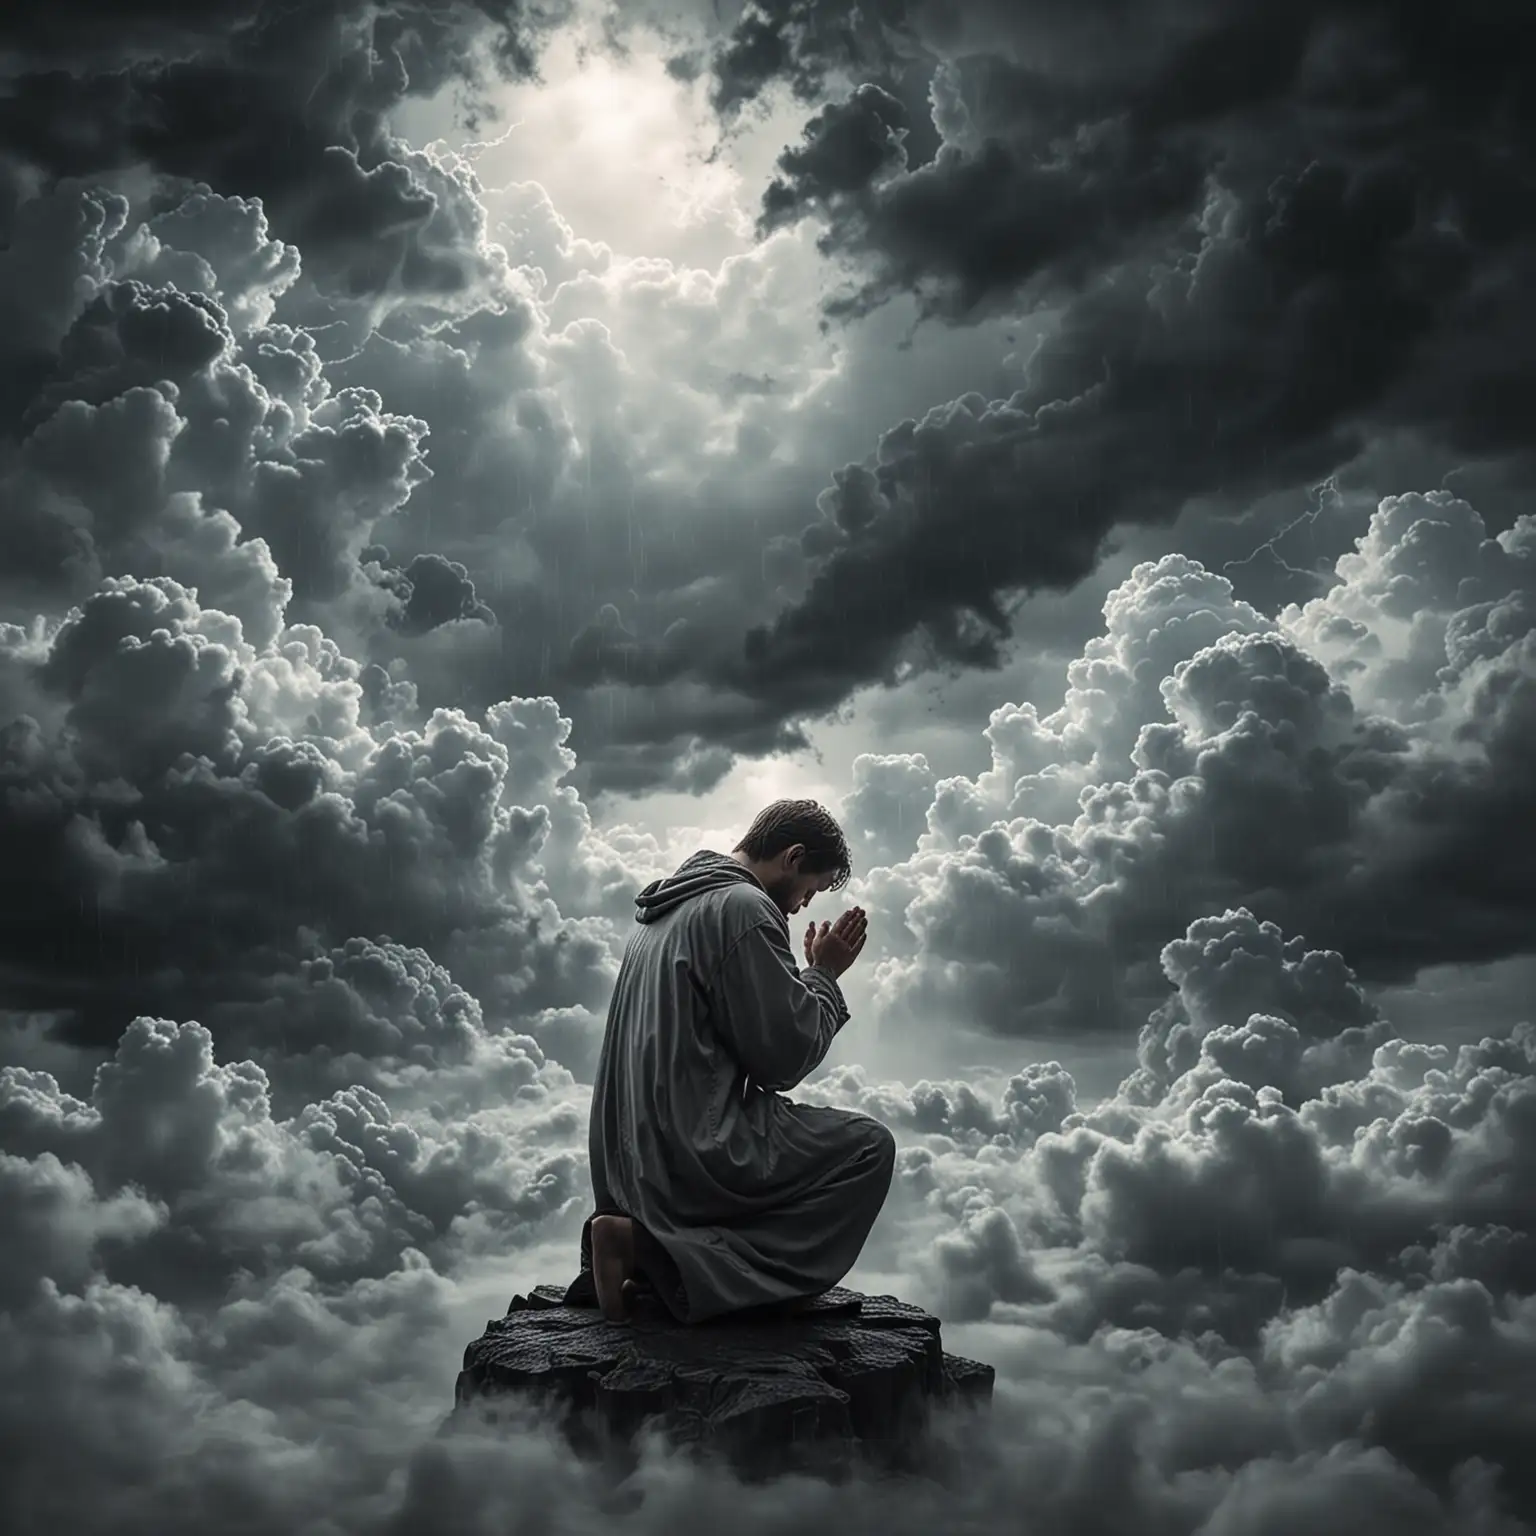 Man praying in the clouds, rainy, grayish hue, full of mystery. God seeker